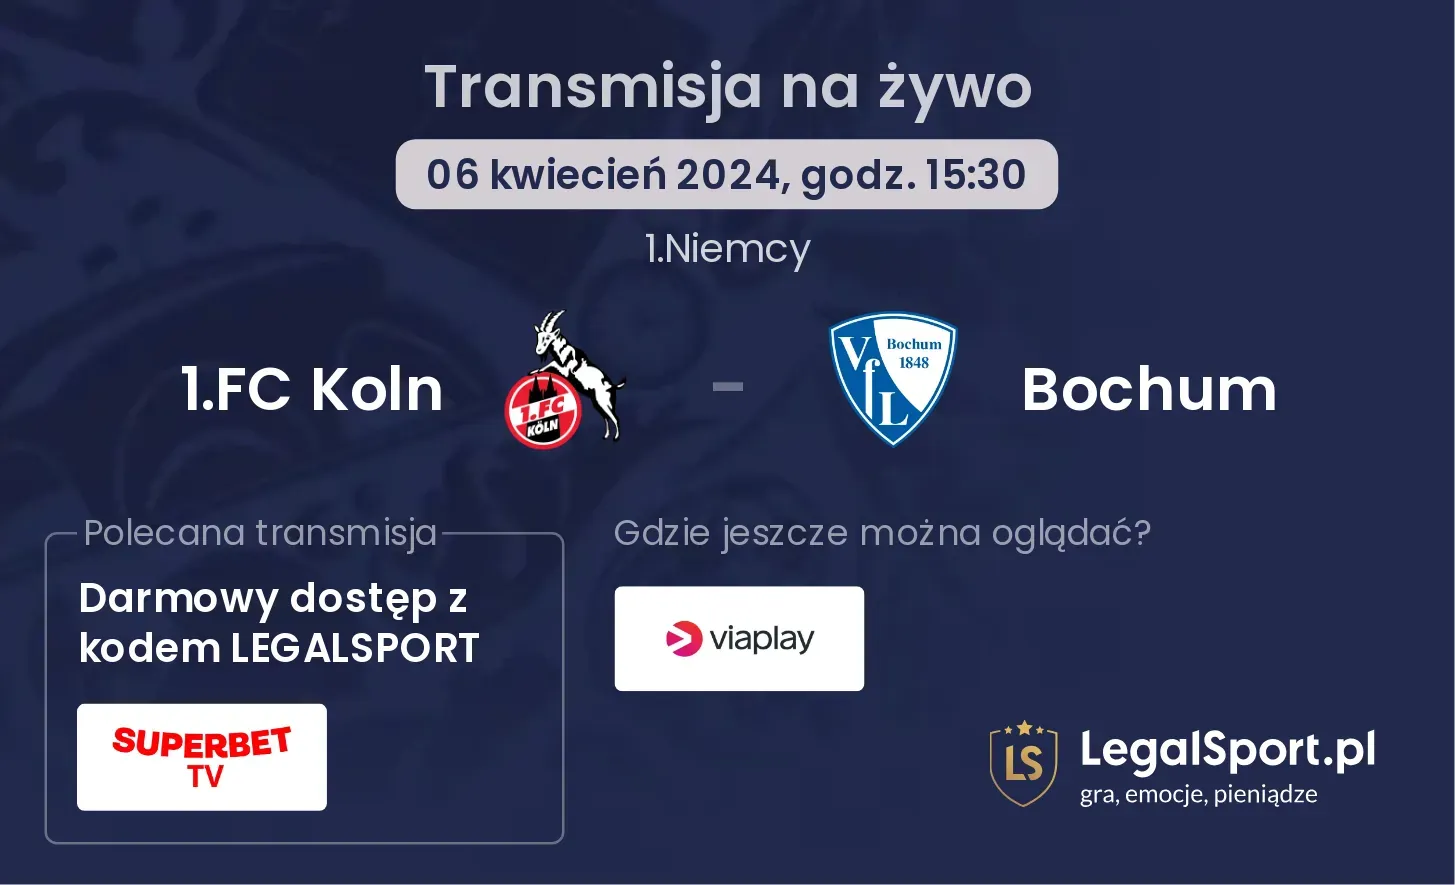 1.FC Koln - Bochum transmisja na żywo